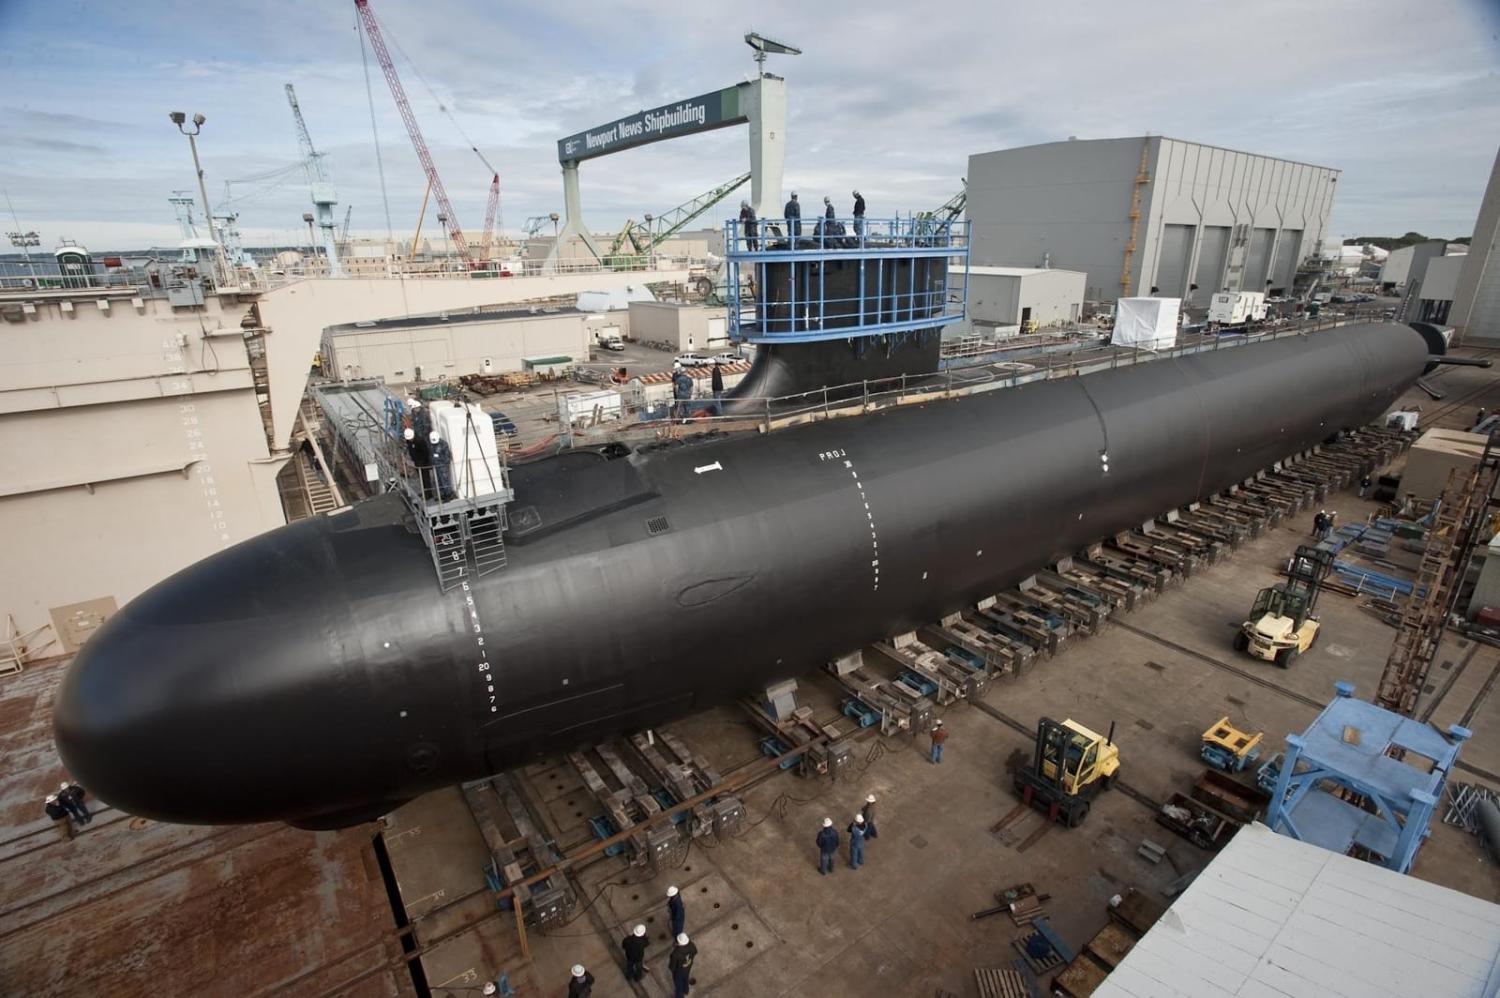 A Virginia-class attack submarine under construction at Huntington Ingalls Newport News Shipbuilding in 2012 (US Navy photo courtesy of Newport News Shipbuilding)